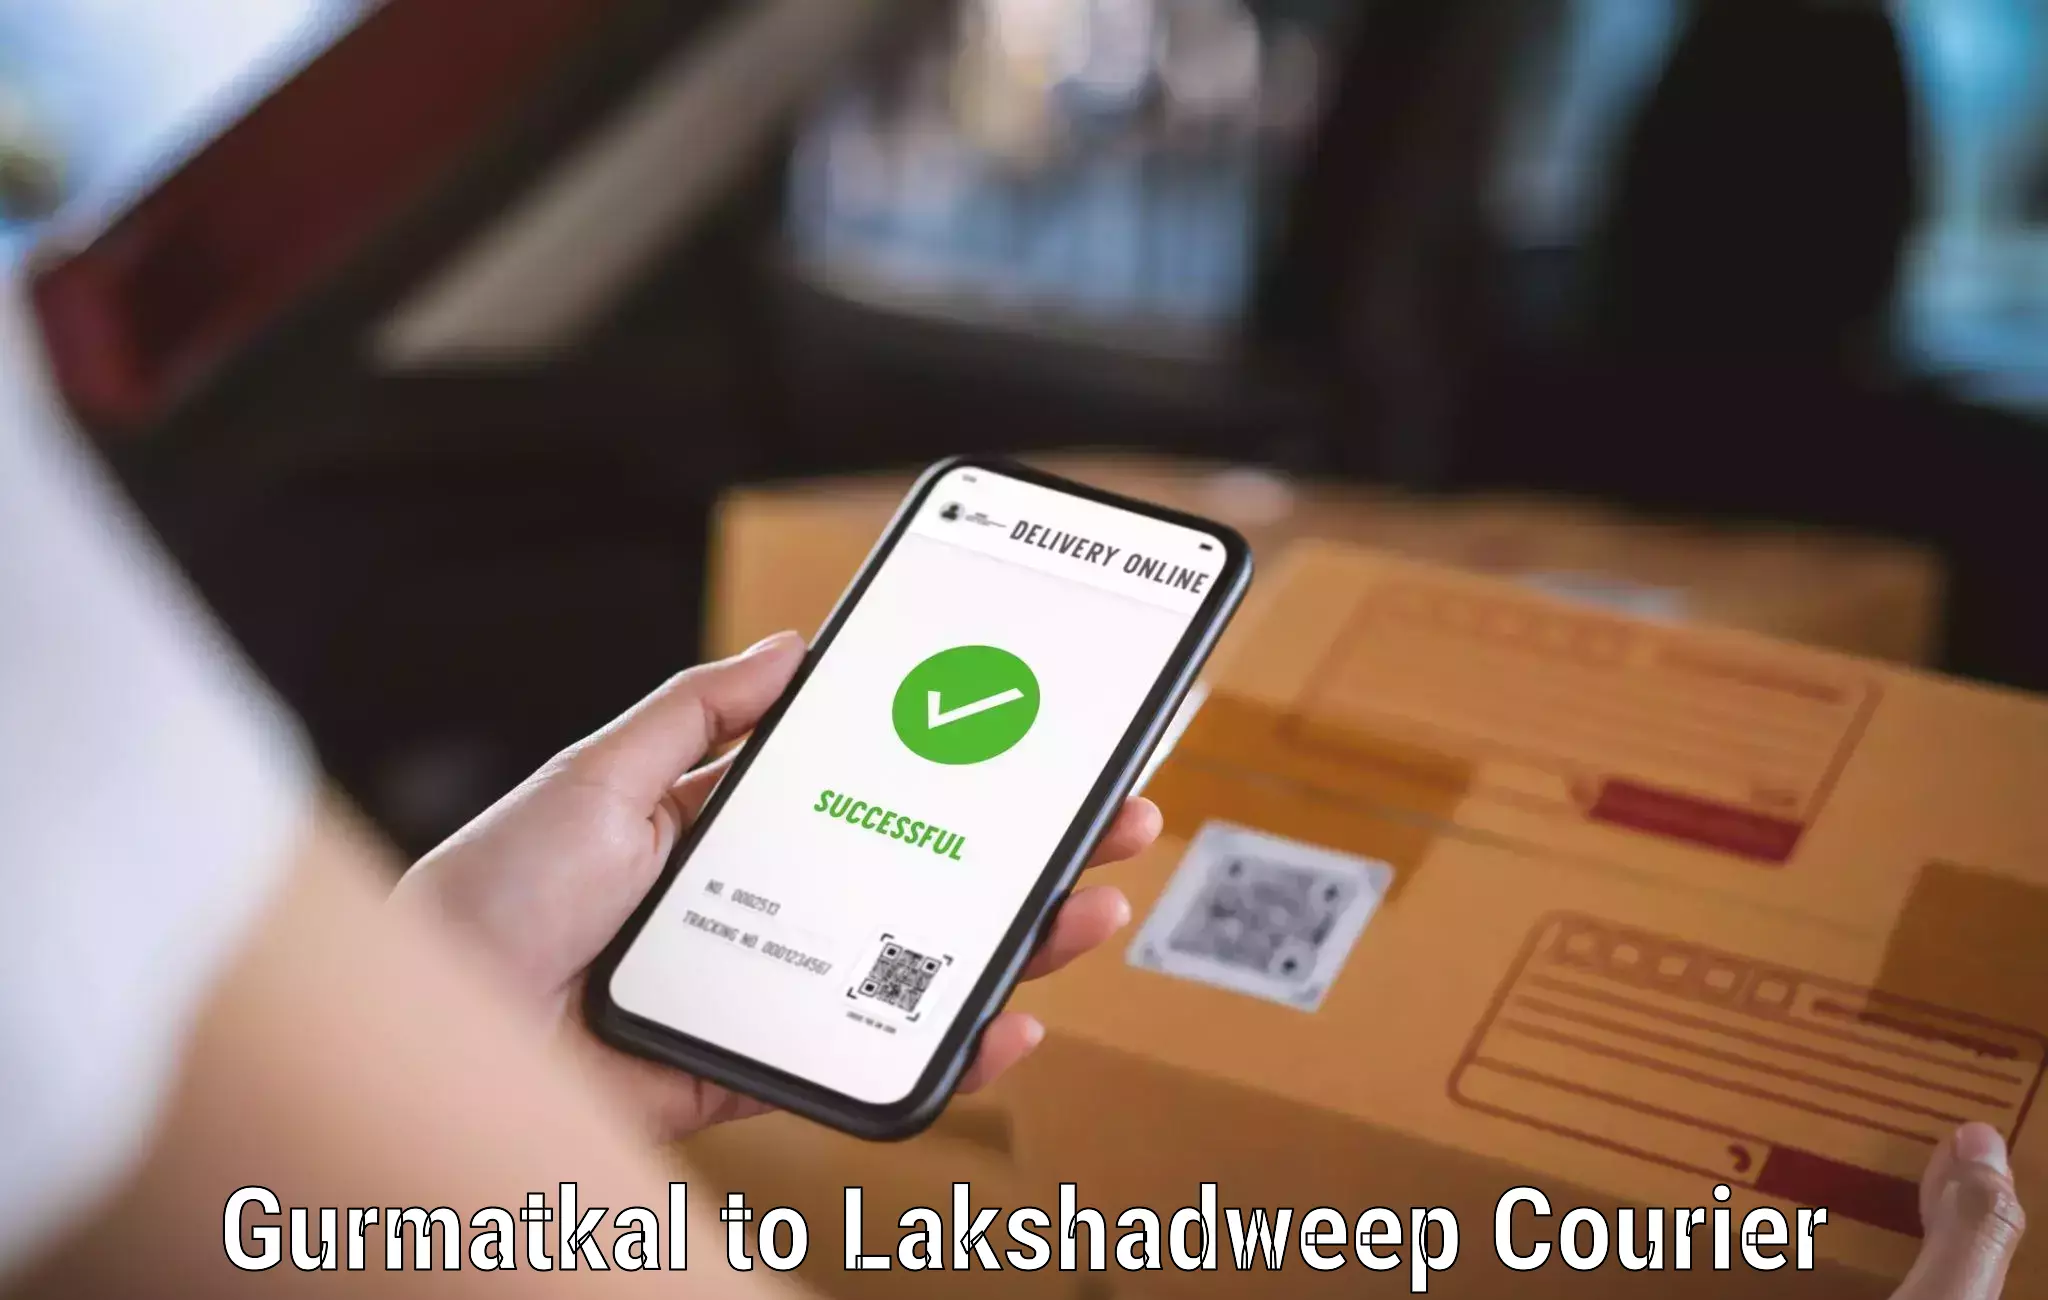 Package delivery network Gurmatkal to Lakshadweep